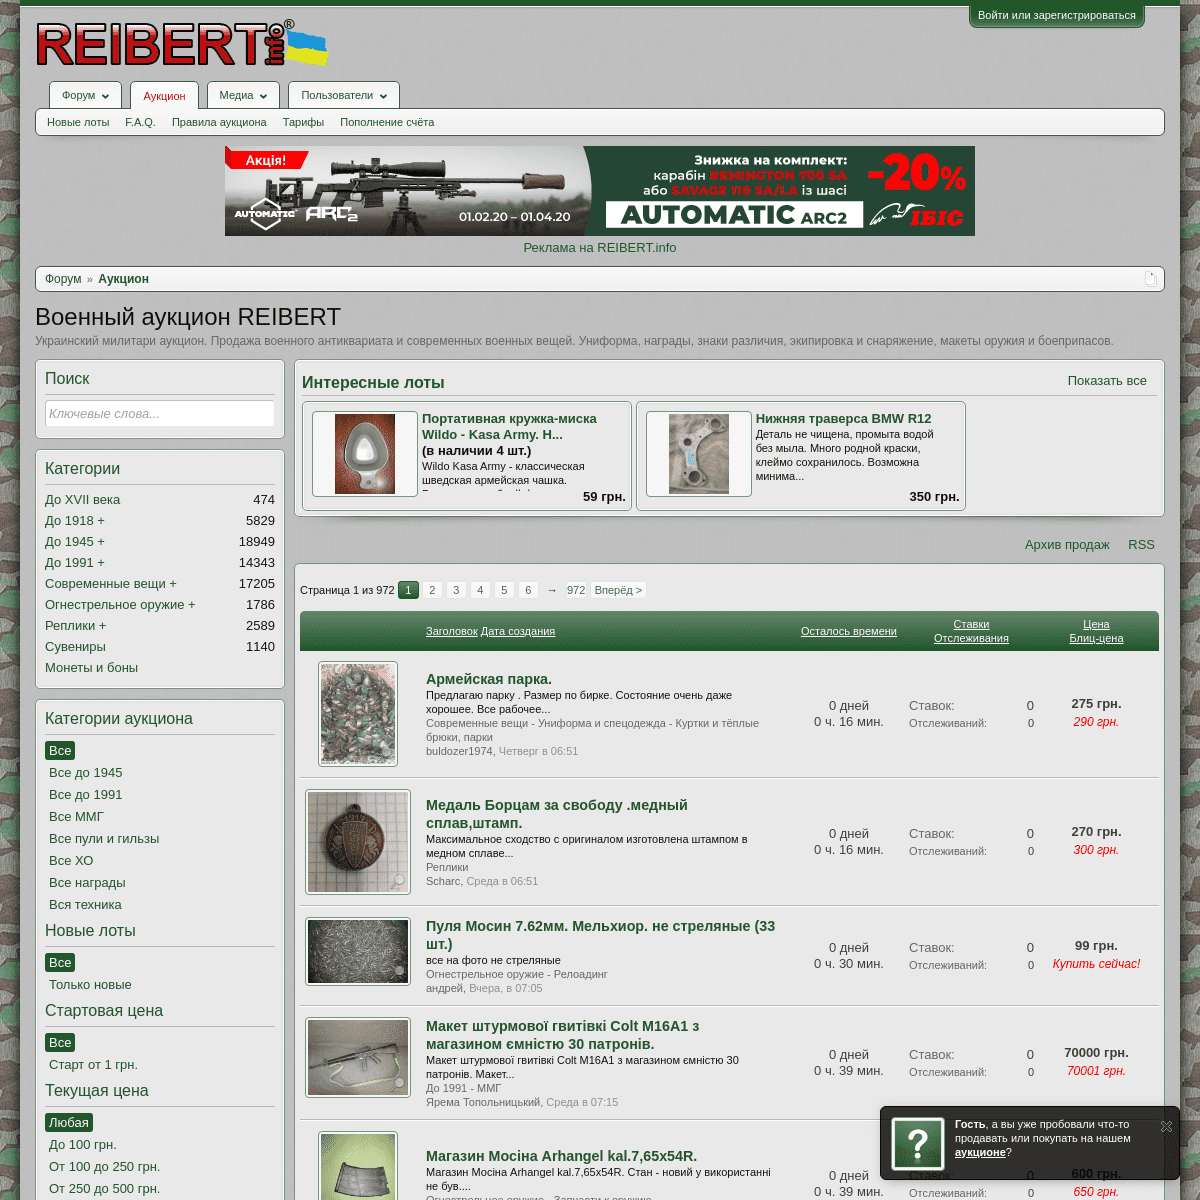 A complete backup of reibert.info